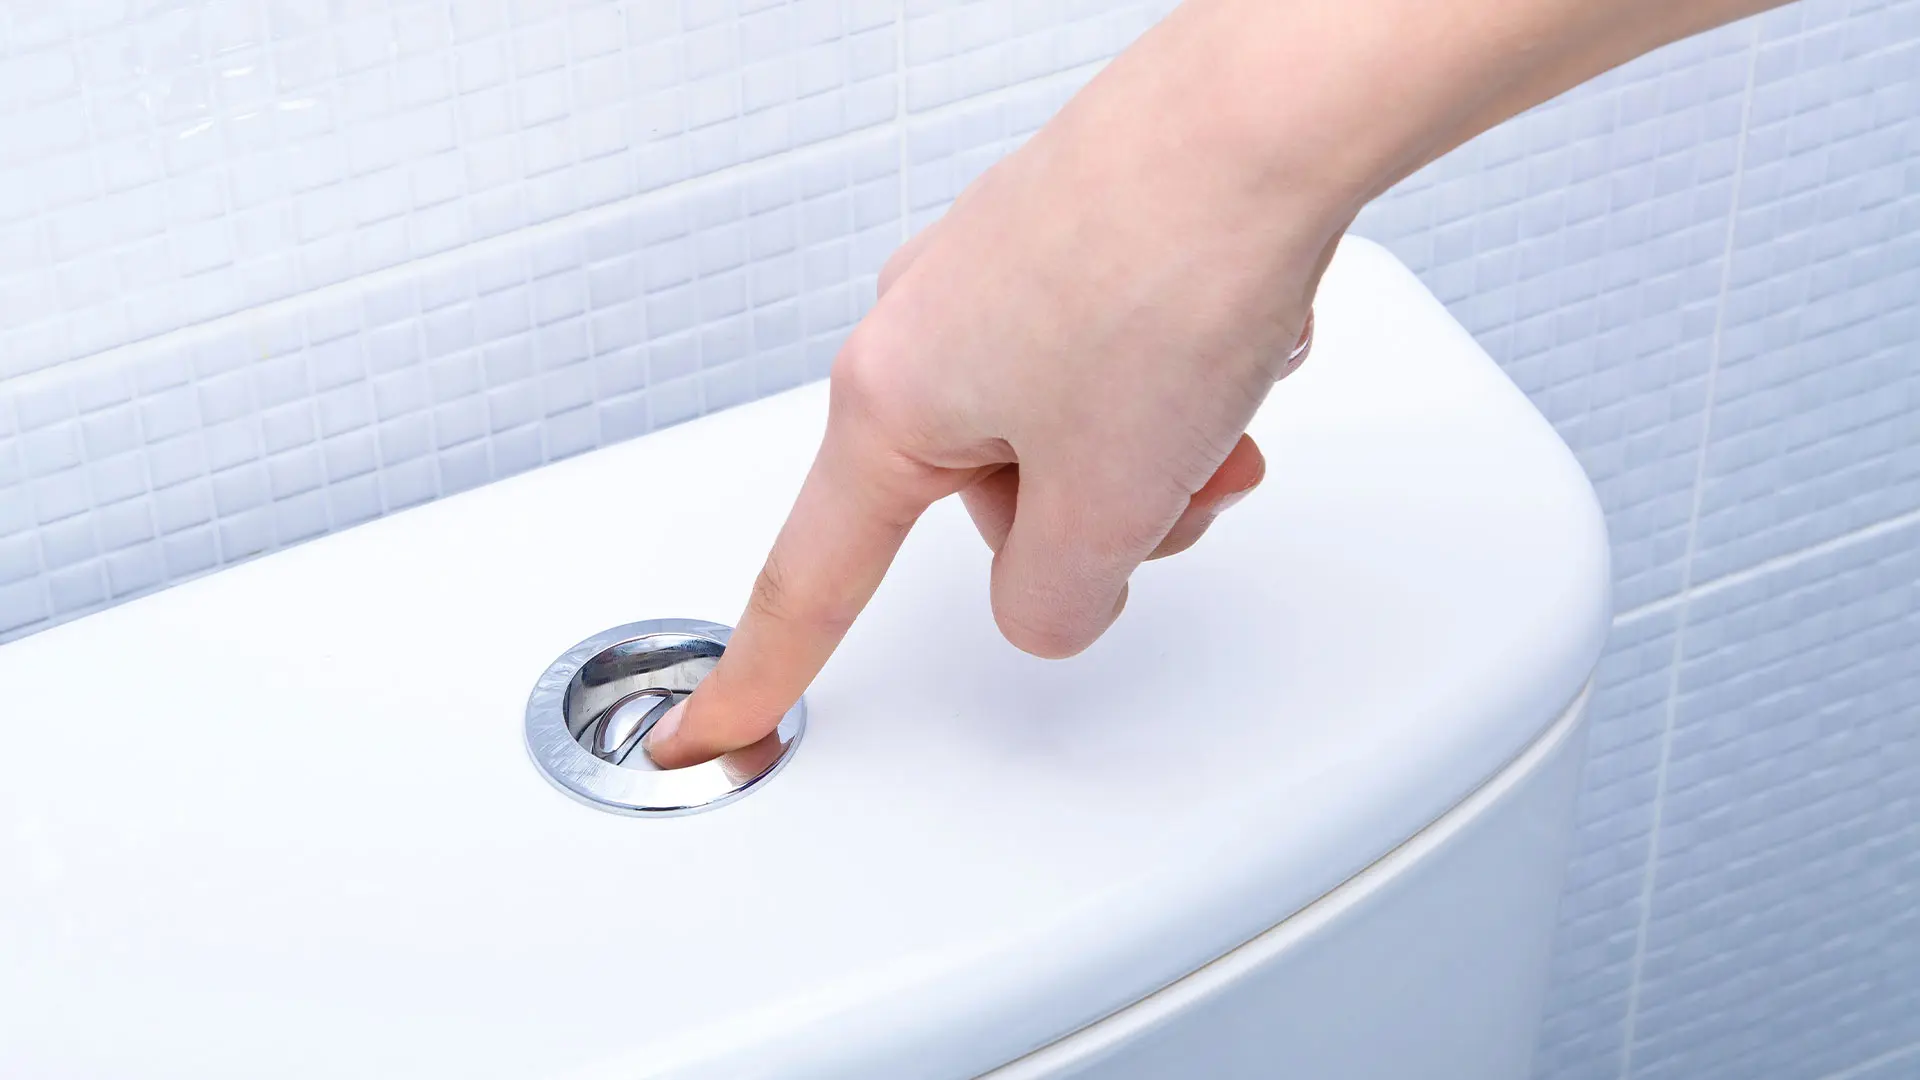 Hand pressing the toilet flush button